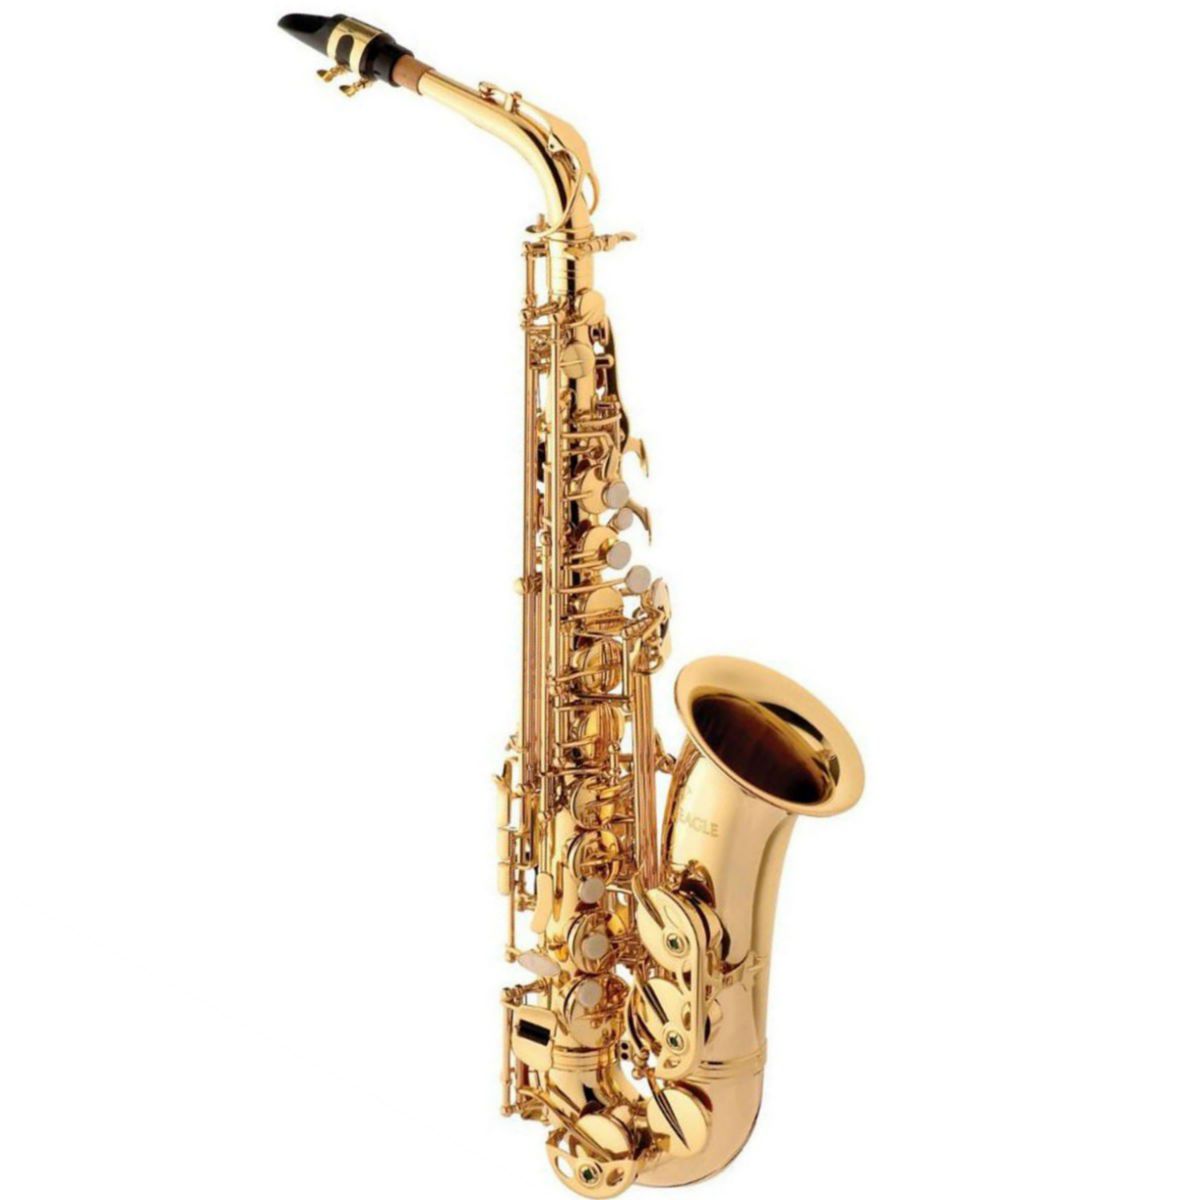 Saxofone Eagle Alto SA-501 em MIB